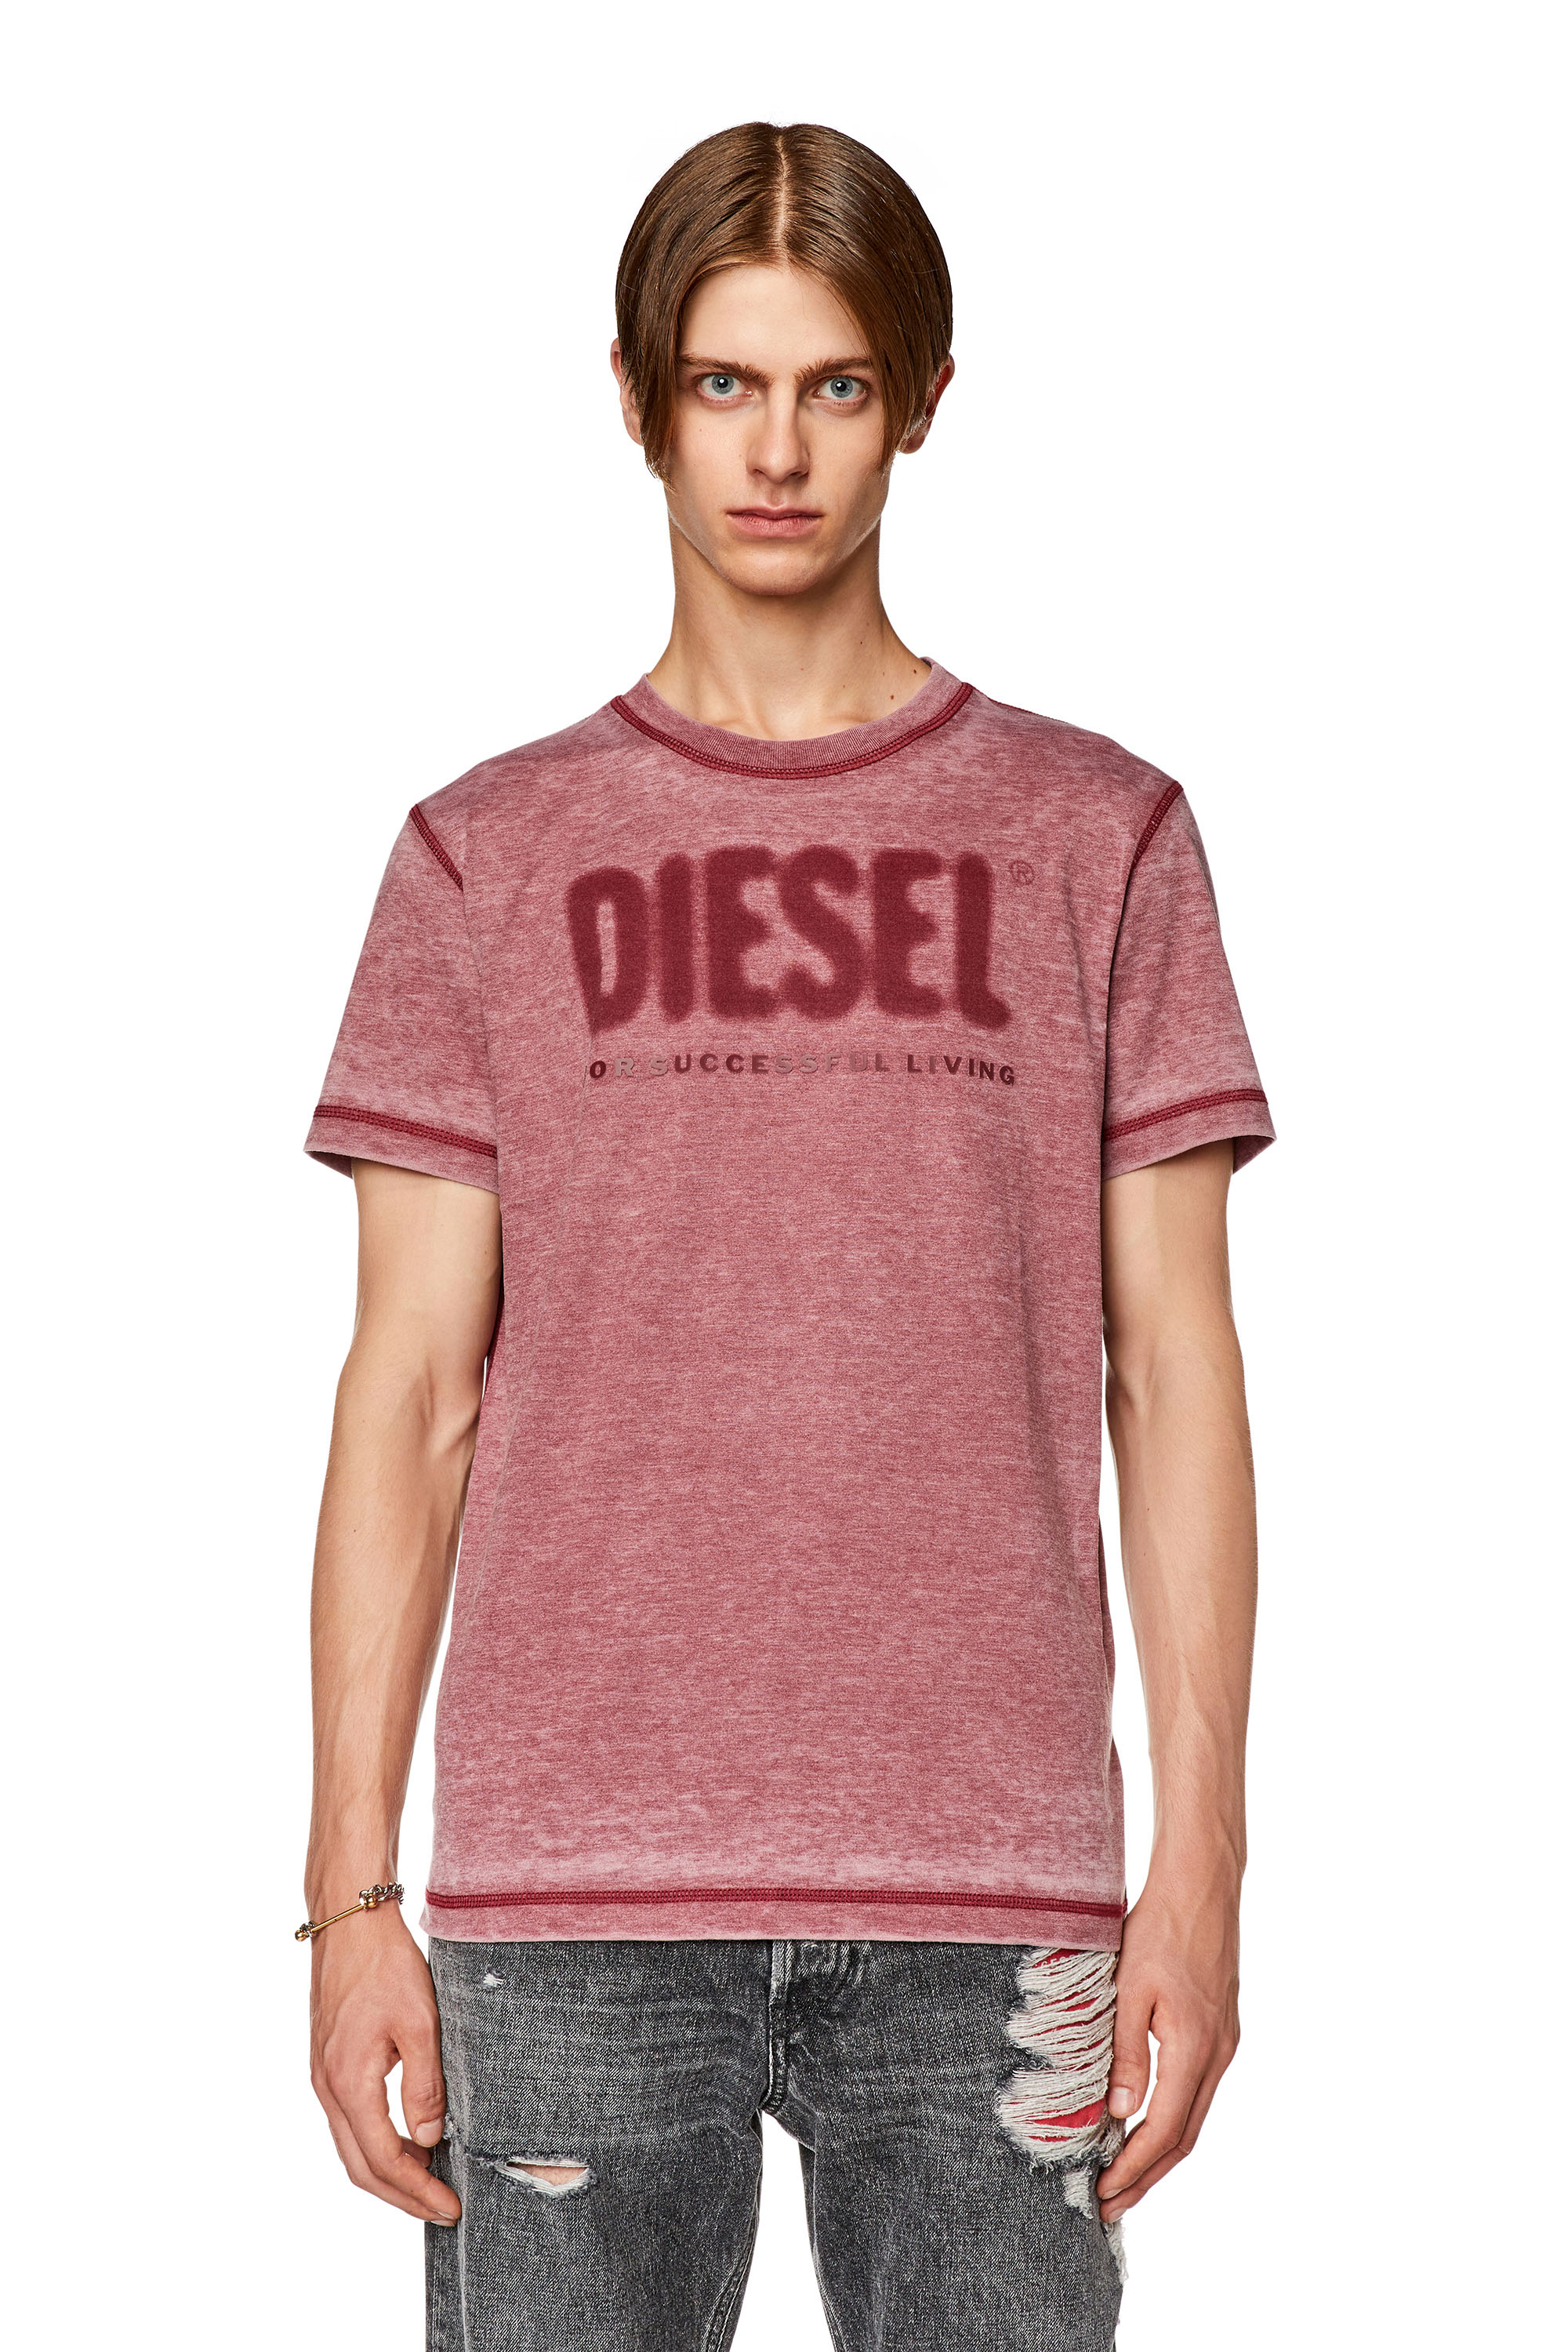 Diesel Men: New arrivals, T shirt Diesel®